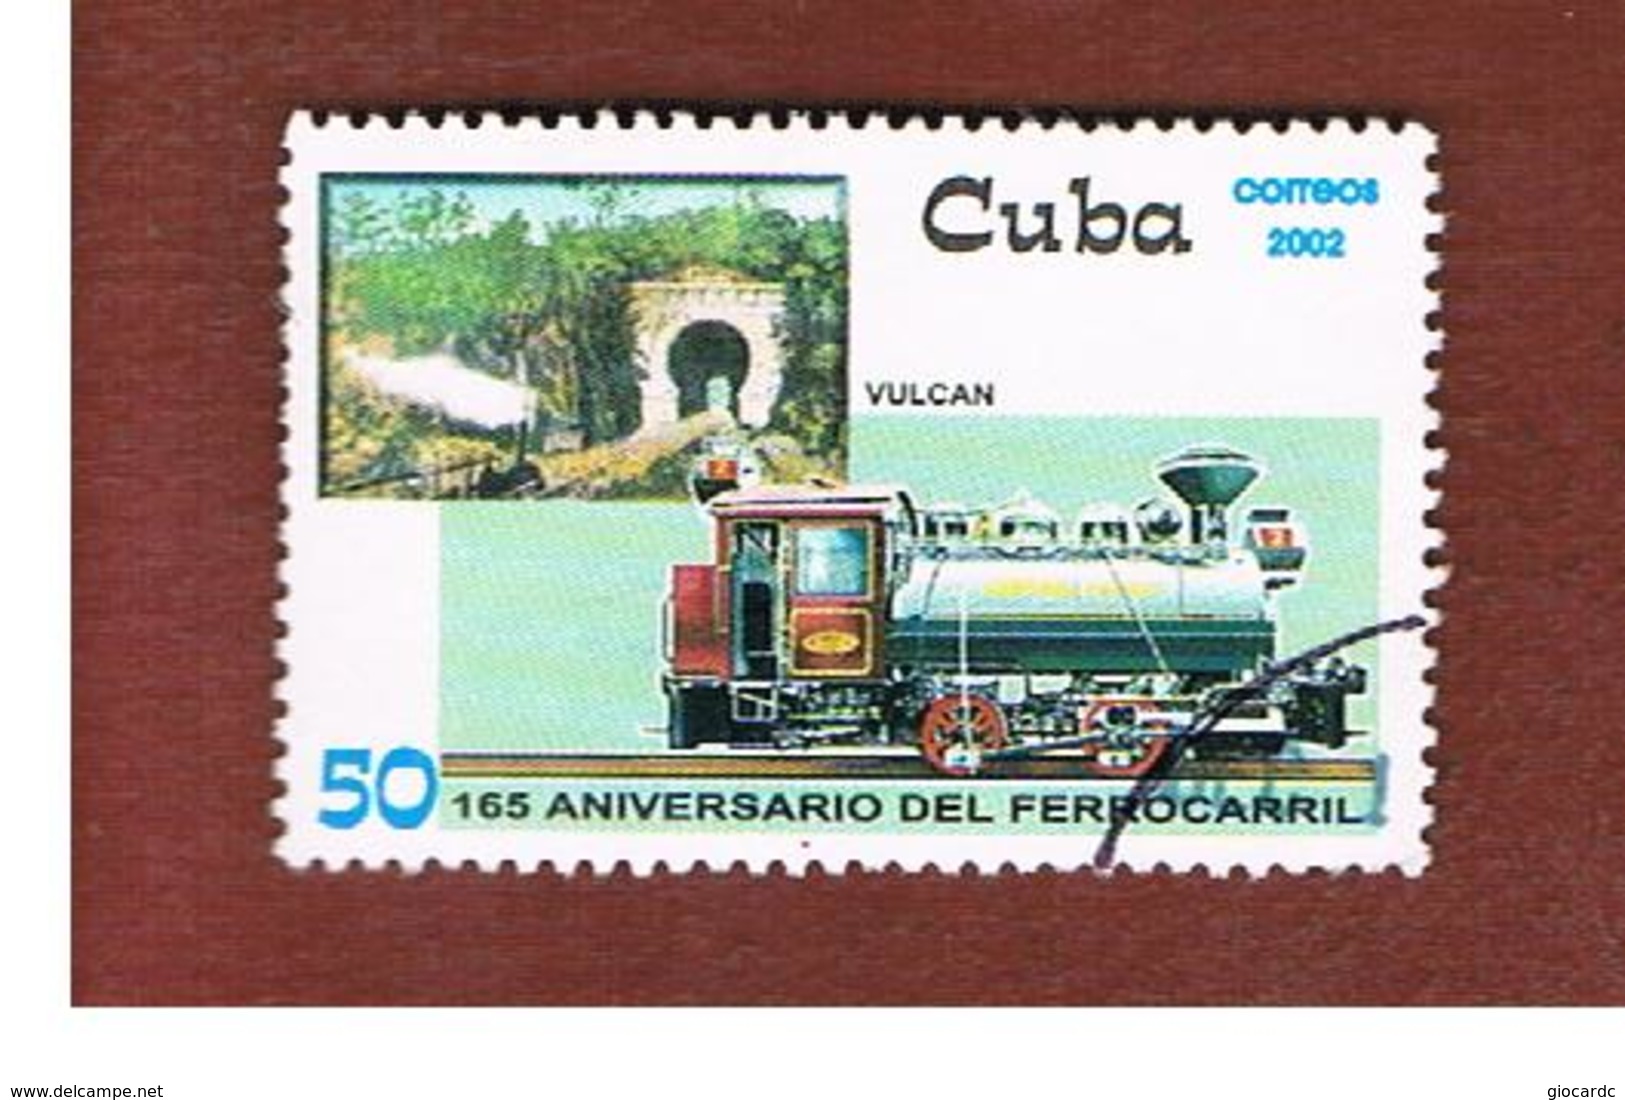 CUBA -  MI  4475 -  2002   LOCOMOTIVES: VULCAN    - USED - Used Stamps